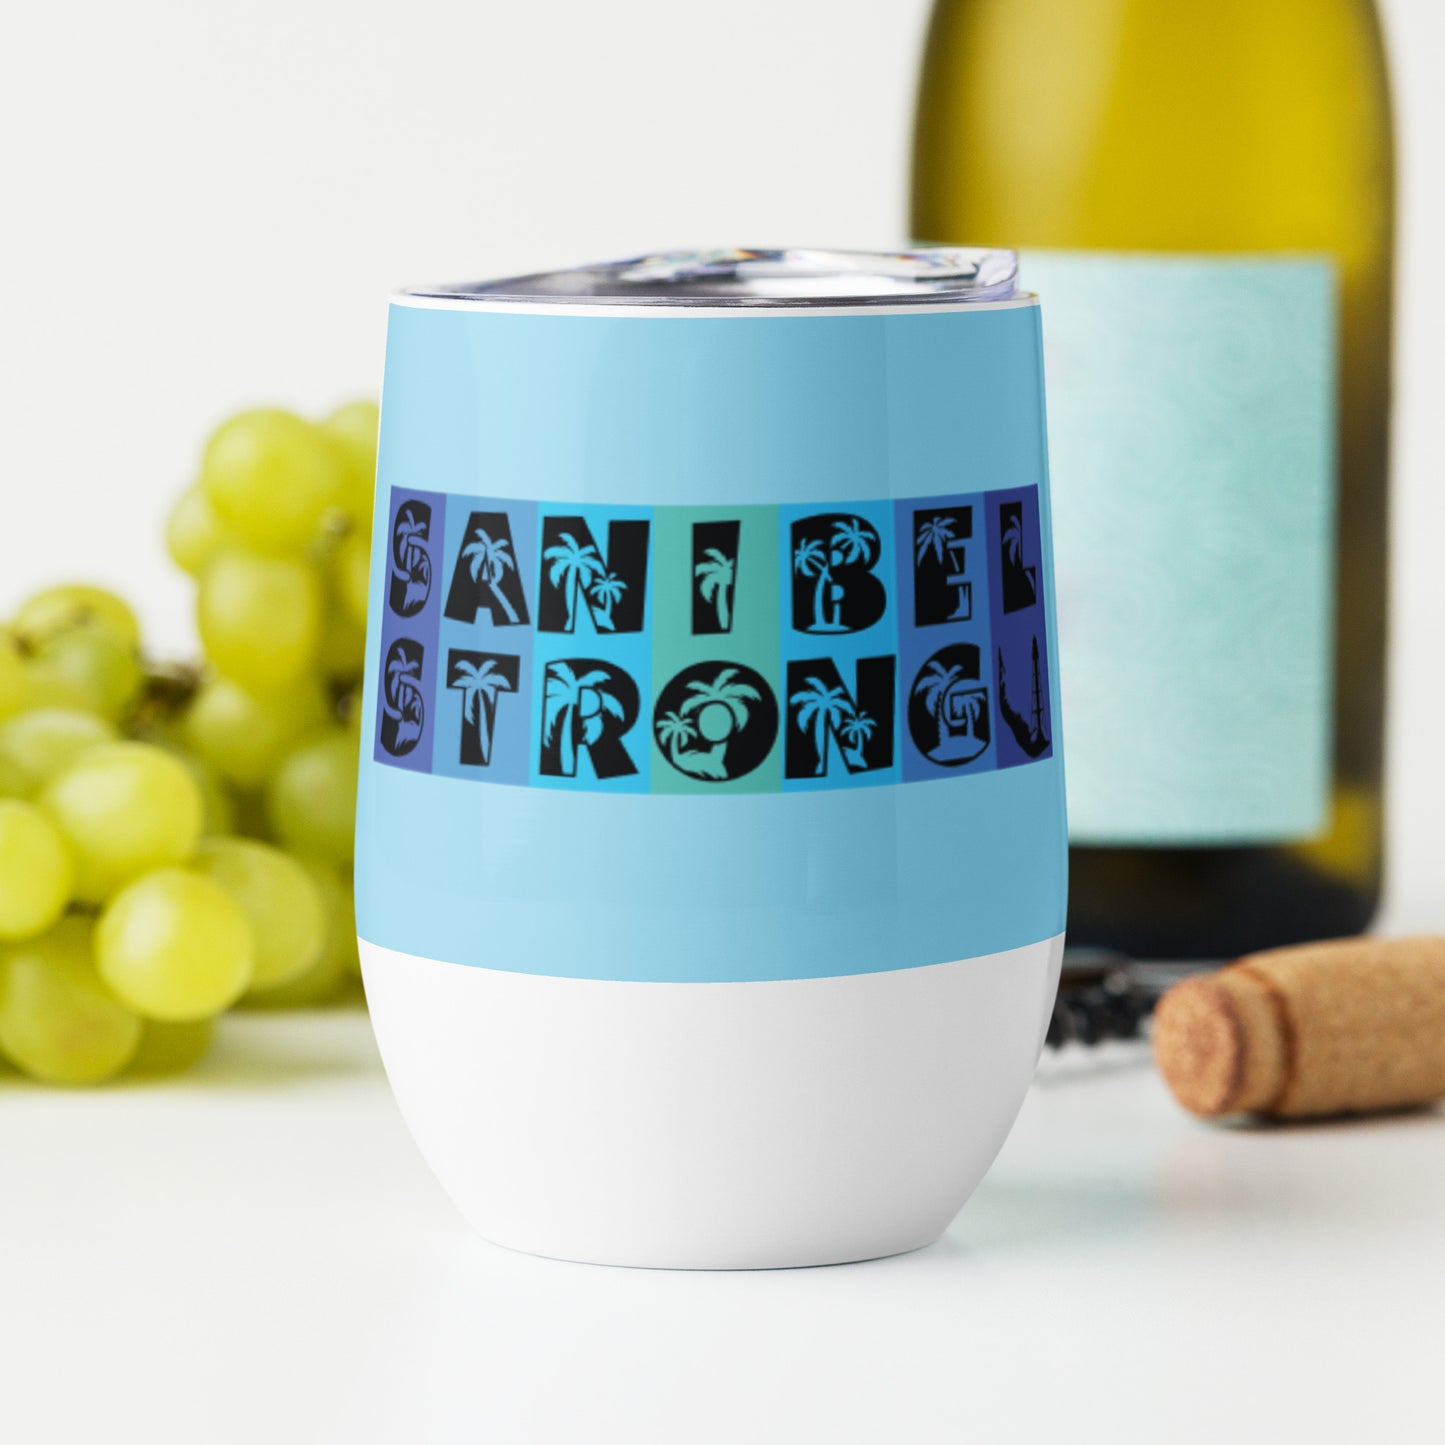 Sanibel Strong Wine Tumbler - Blue Design - Palm Tree Lettering